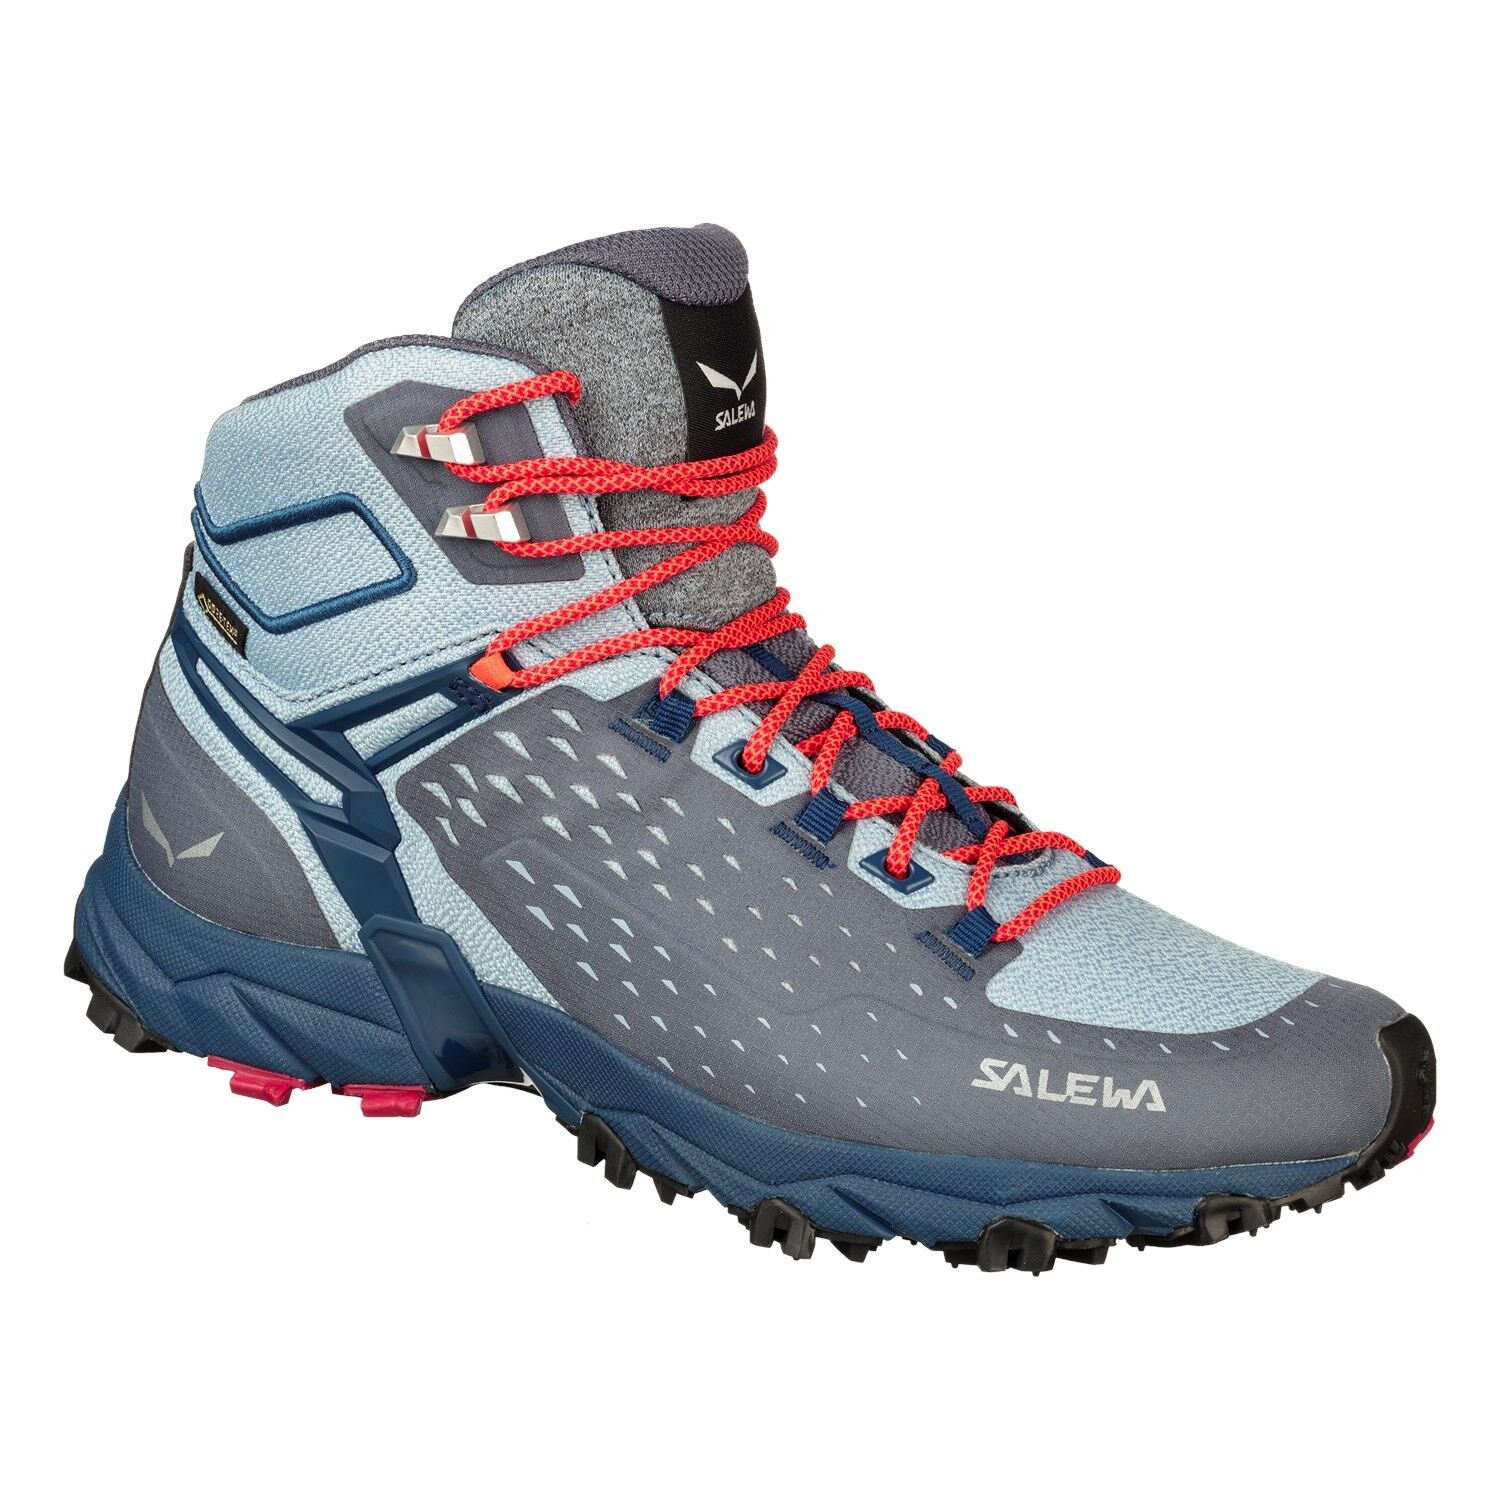 Salewa - Ws Alpenrose Ultra Mid GTX - Hiking Boots - Women's